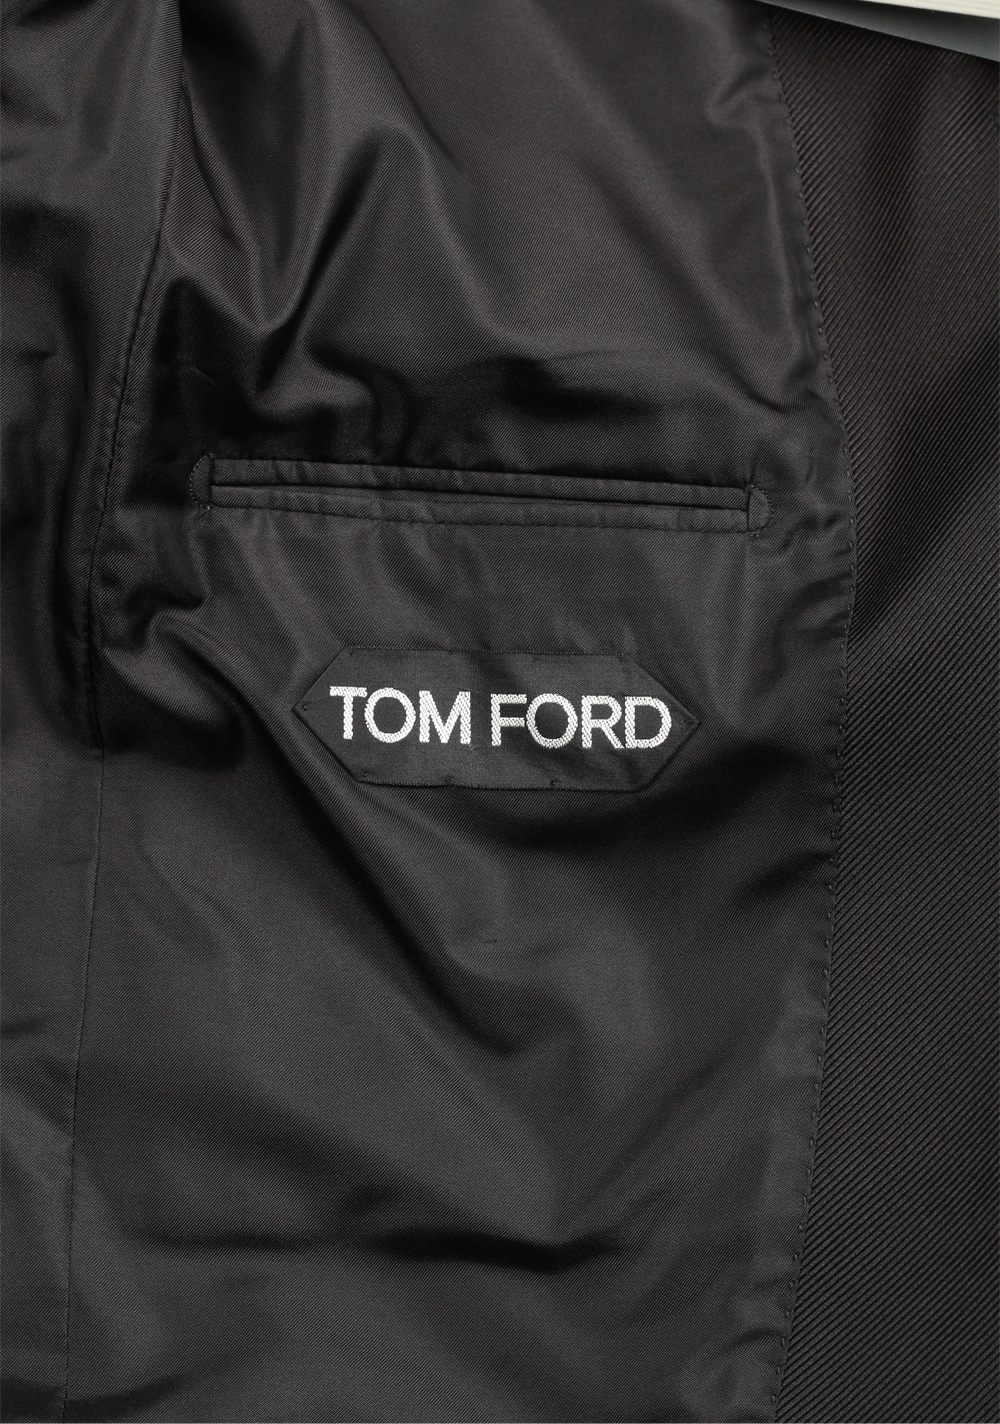 TOM FORD Buckley Black Tuxedo Dinner Jacket 48 / 38R U.S. | Costume Limité